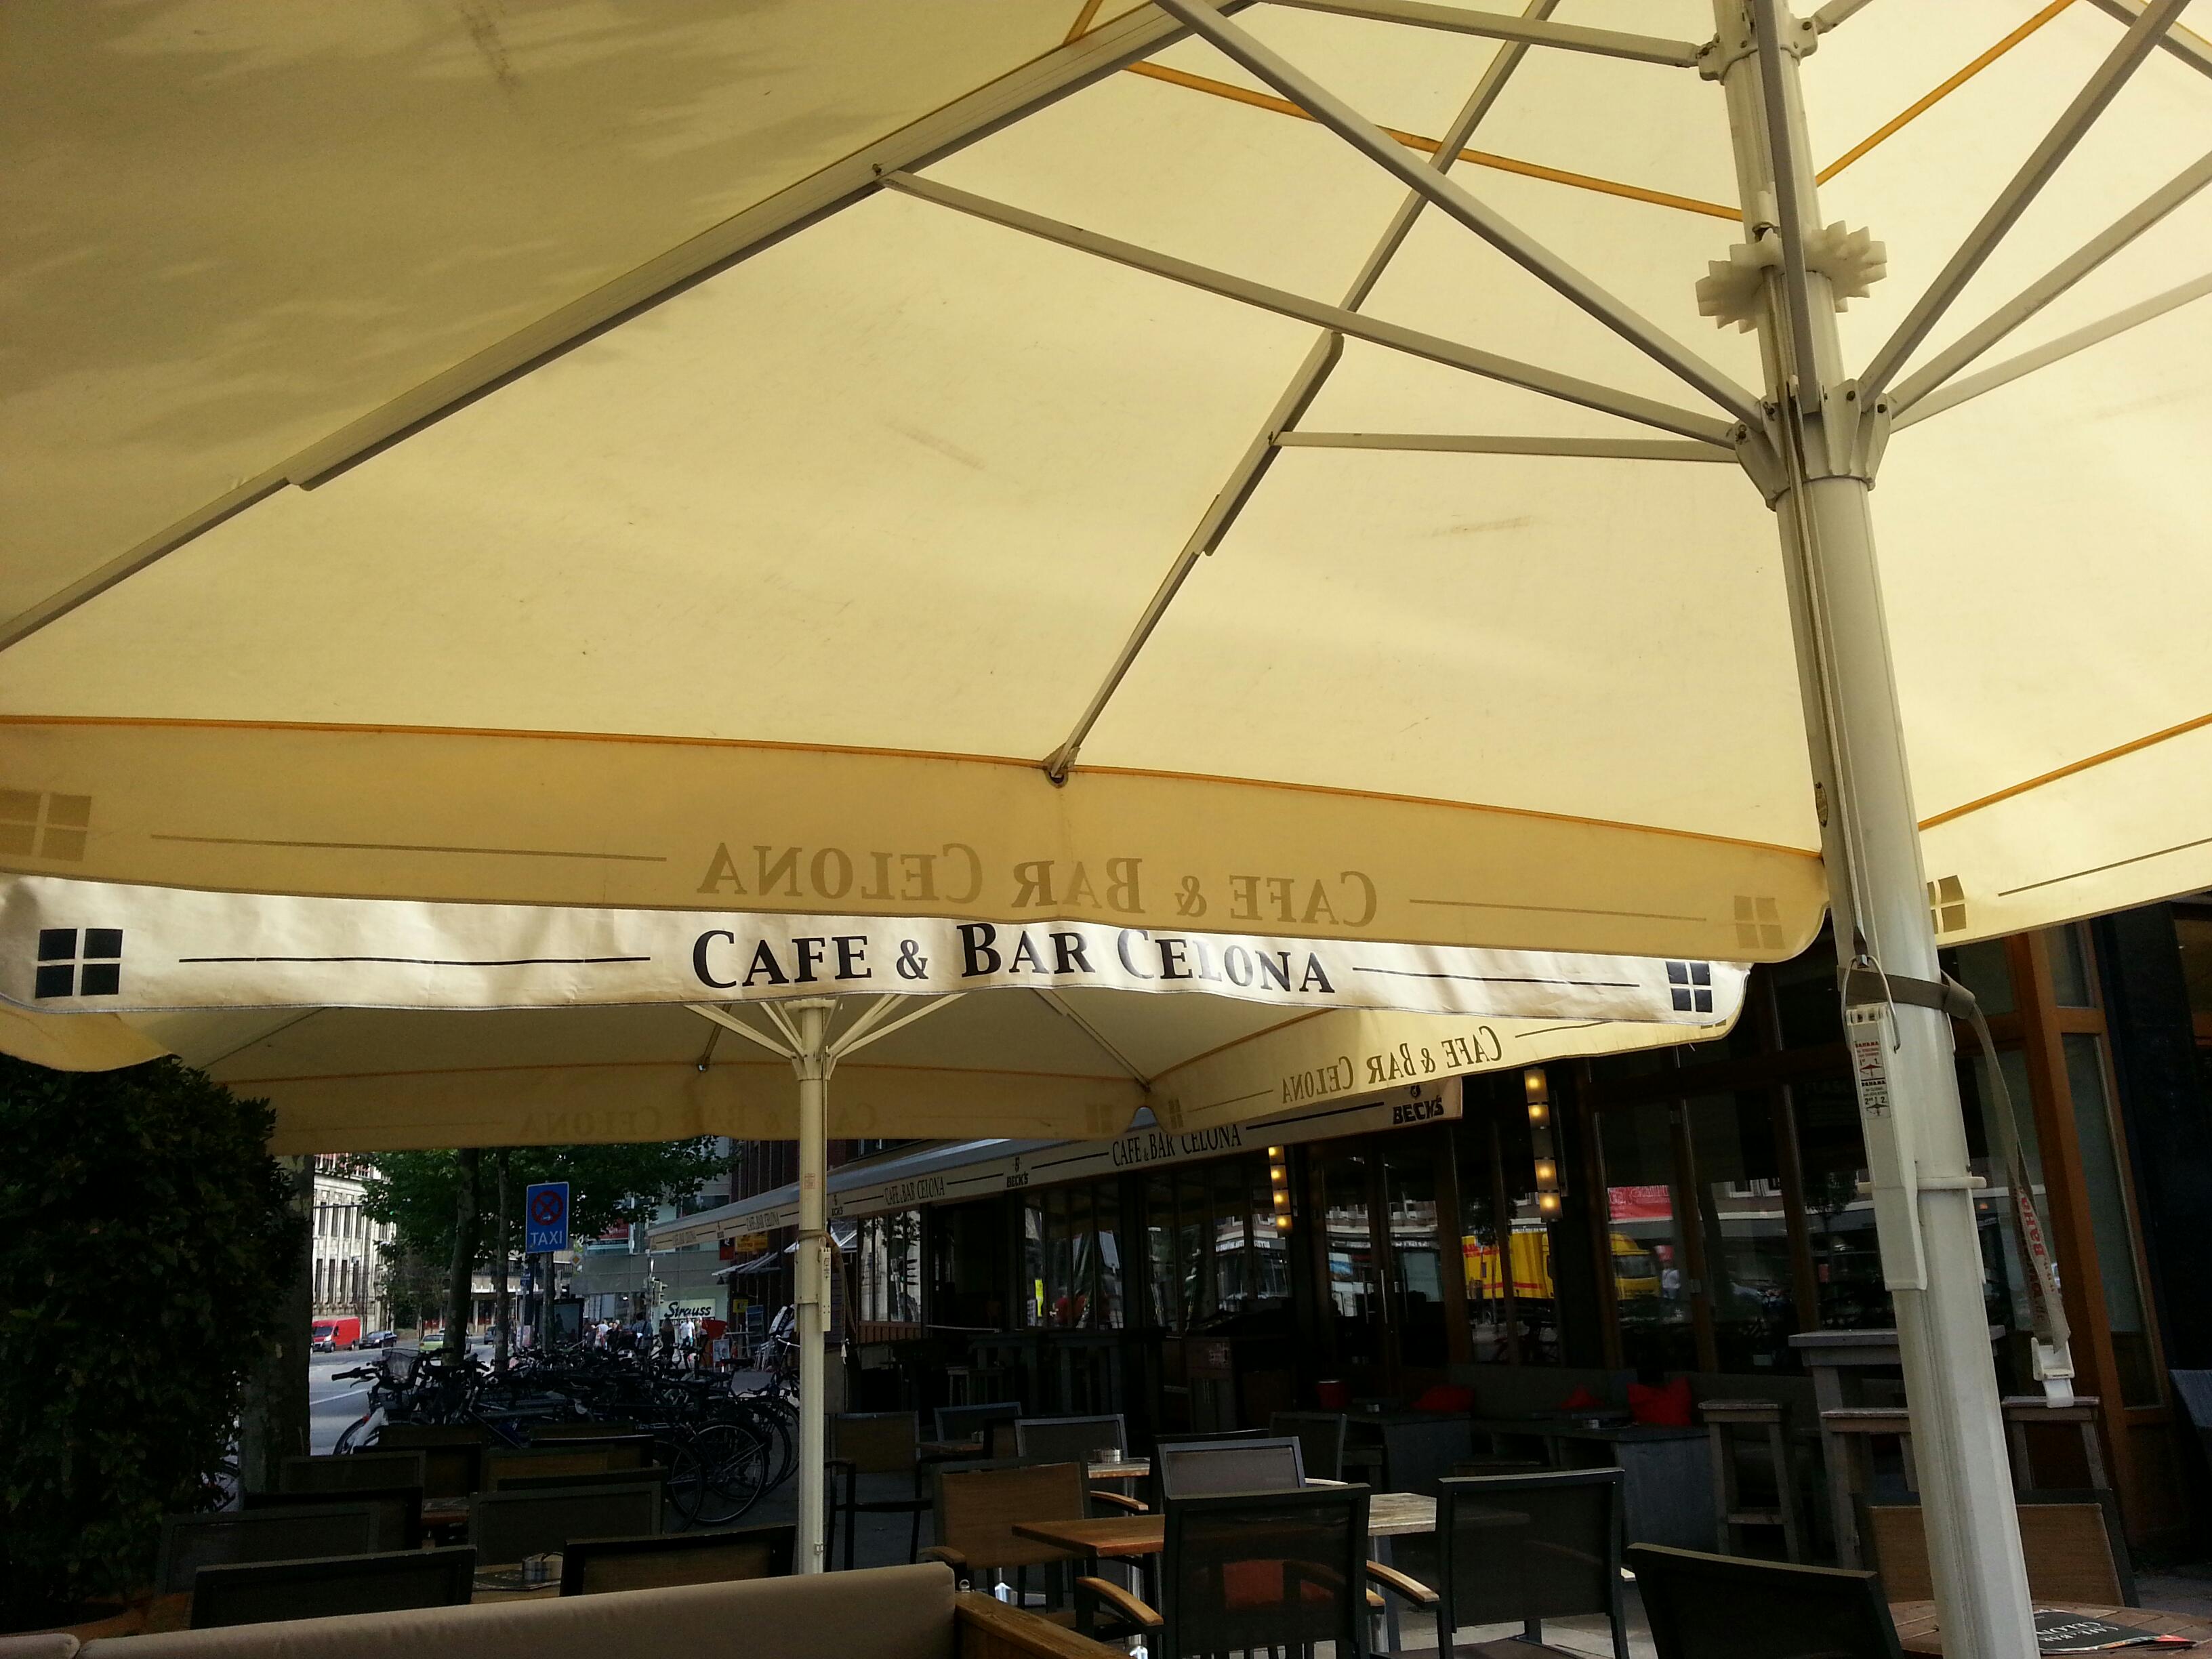 Cafe& Bar celona Drau?en